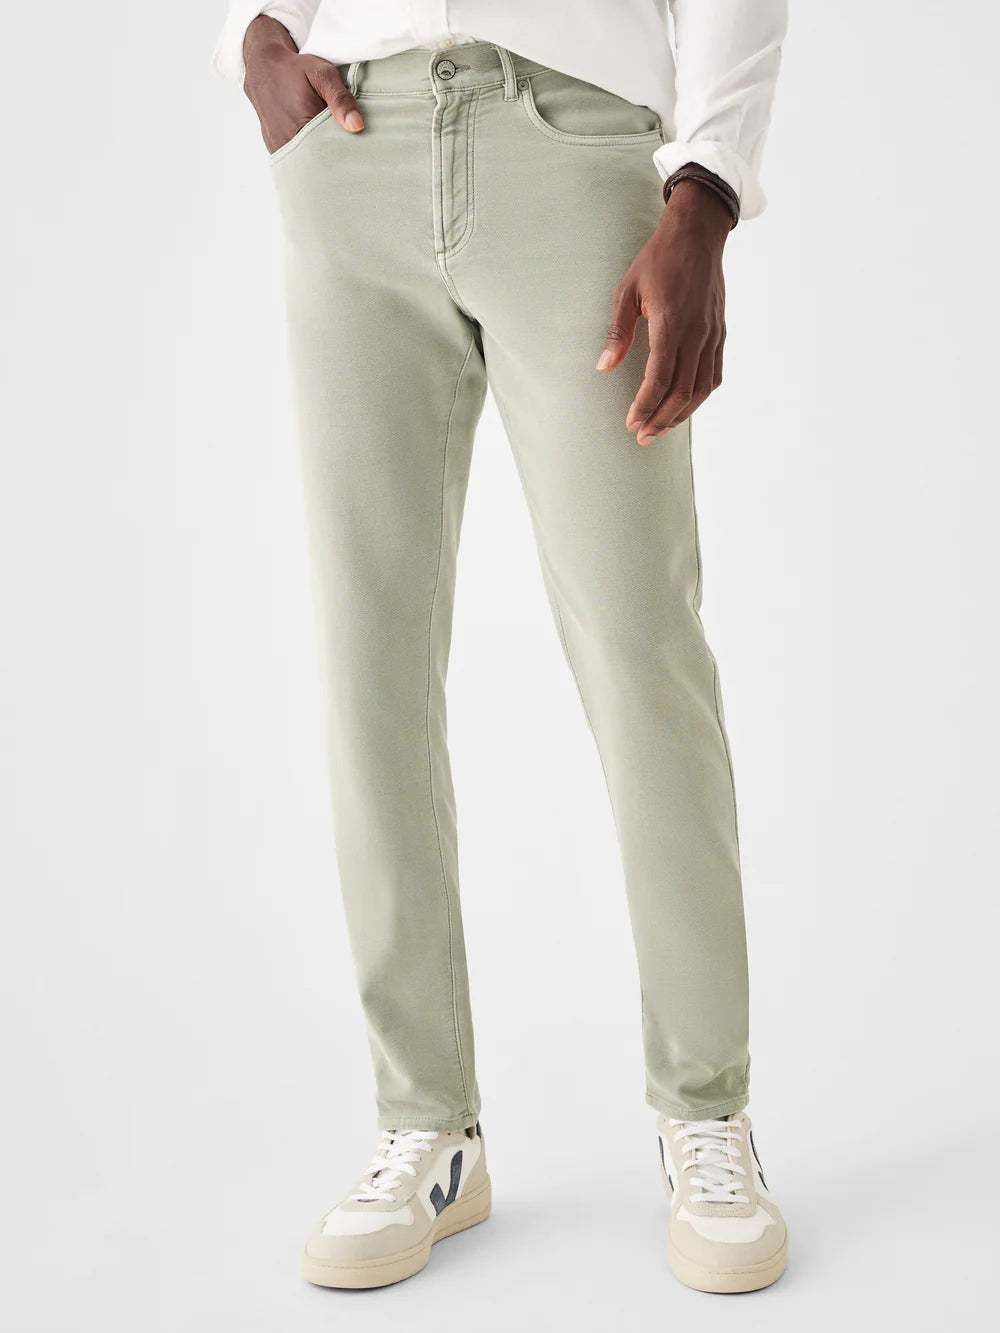 Jeans and Five Pocket Pants – R. Coffee Ltd.